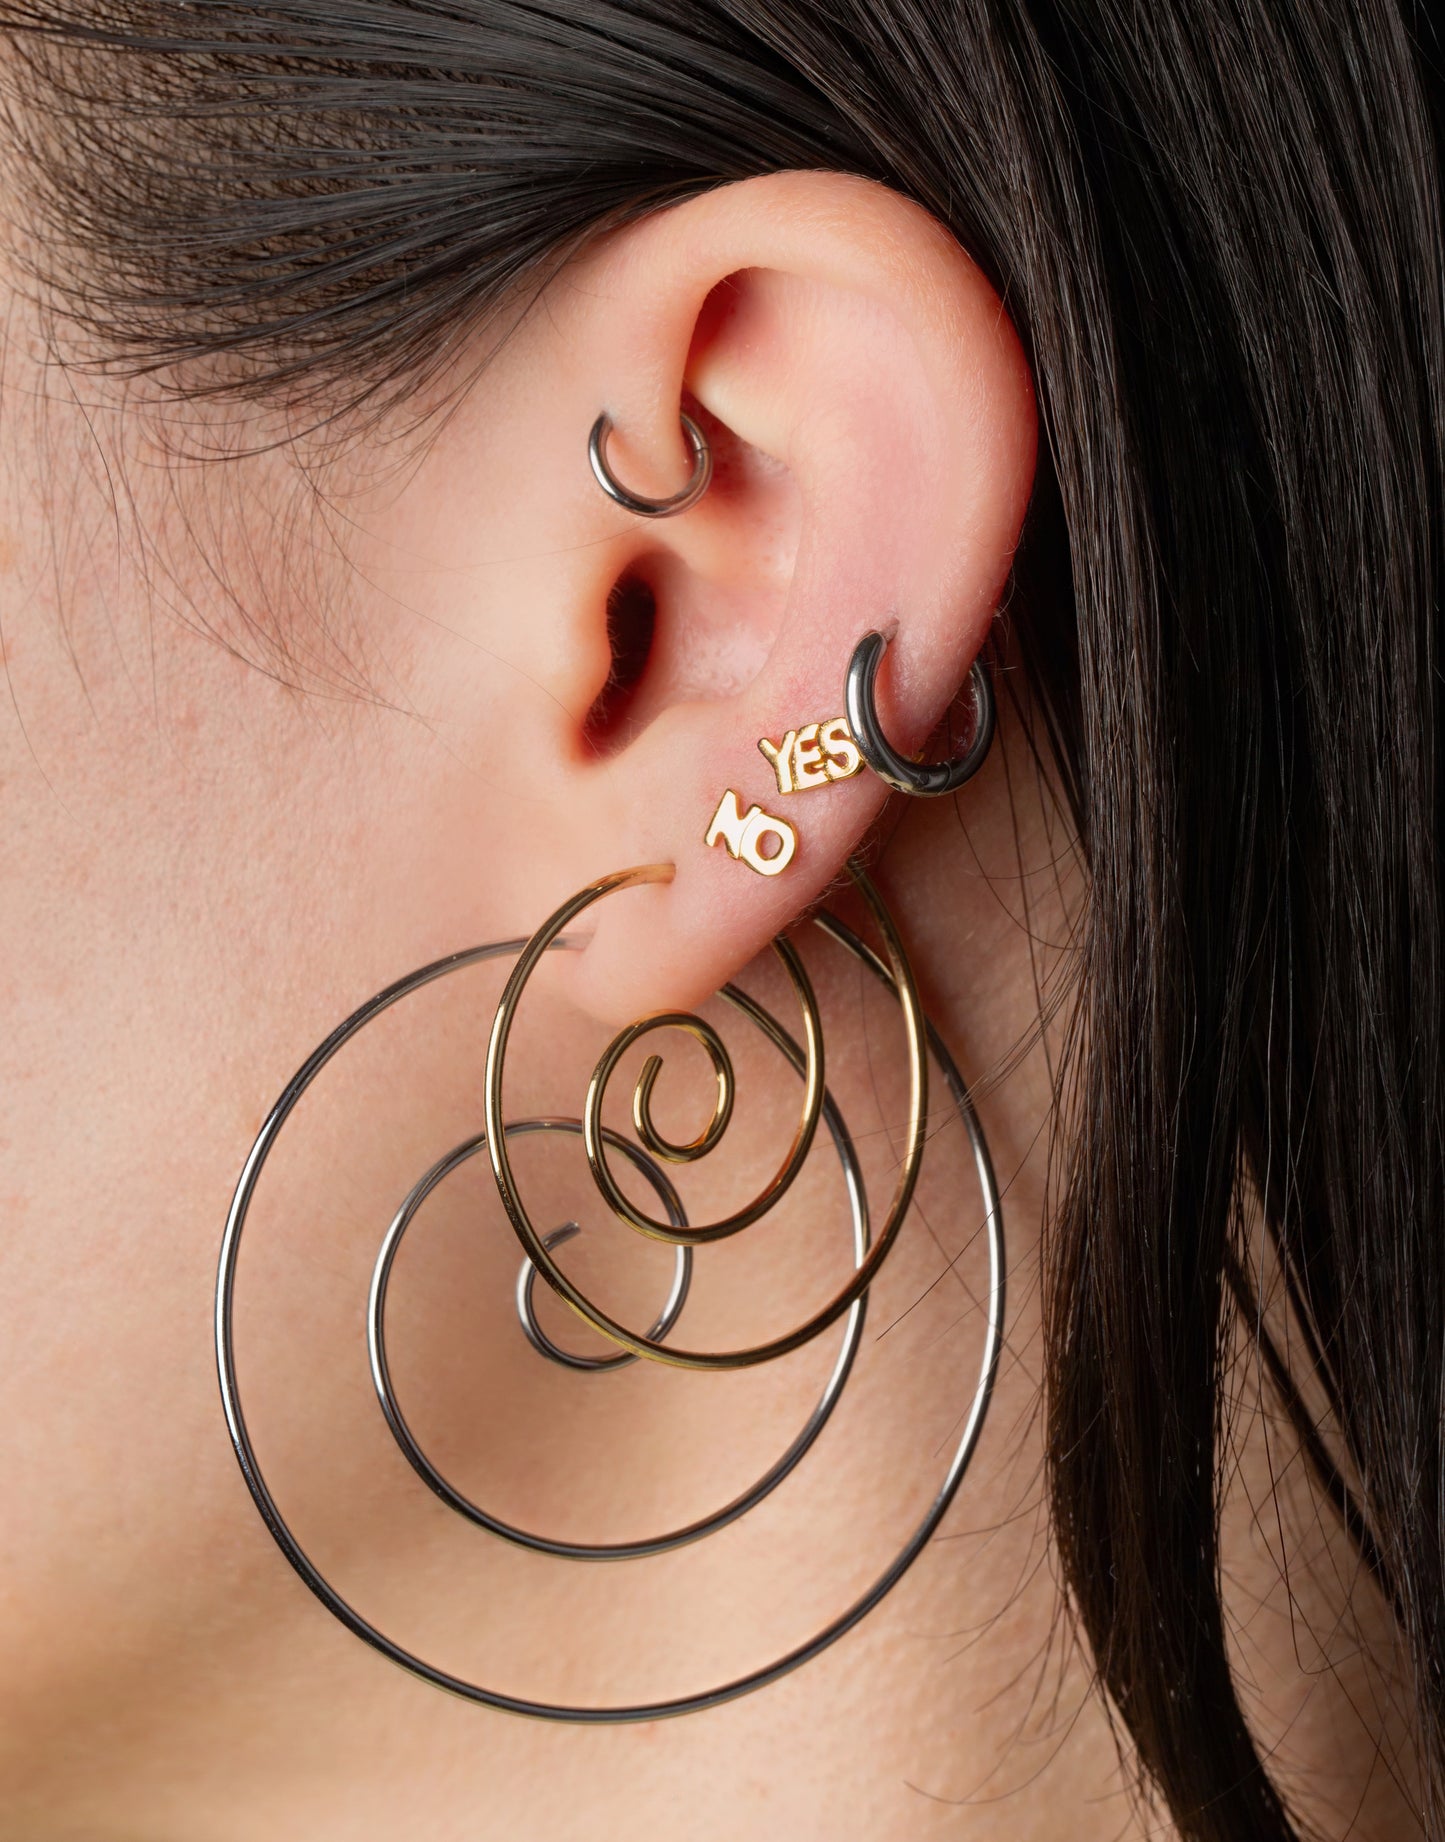 Small Spiral Coiled Hoop Earrings - Stainless Steel - Pair